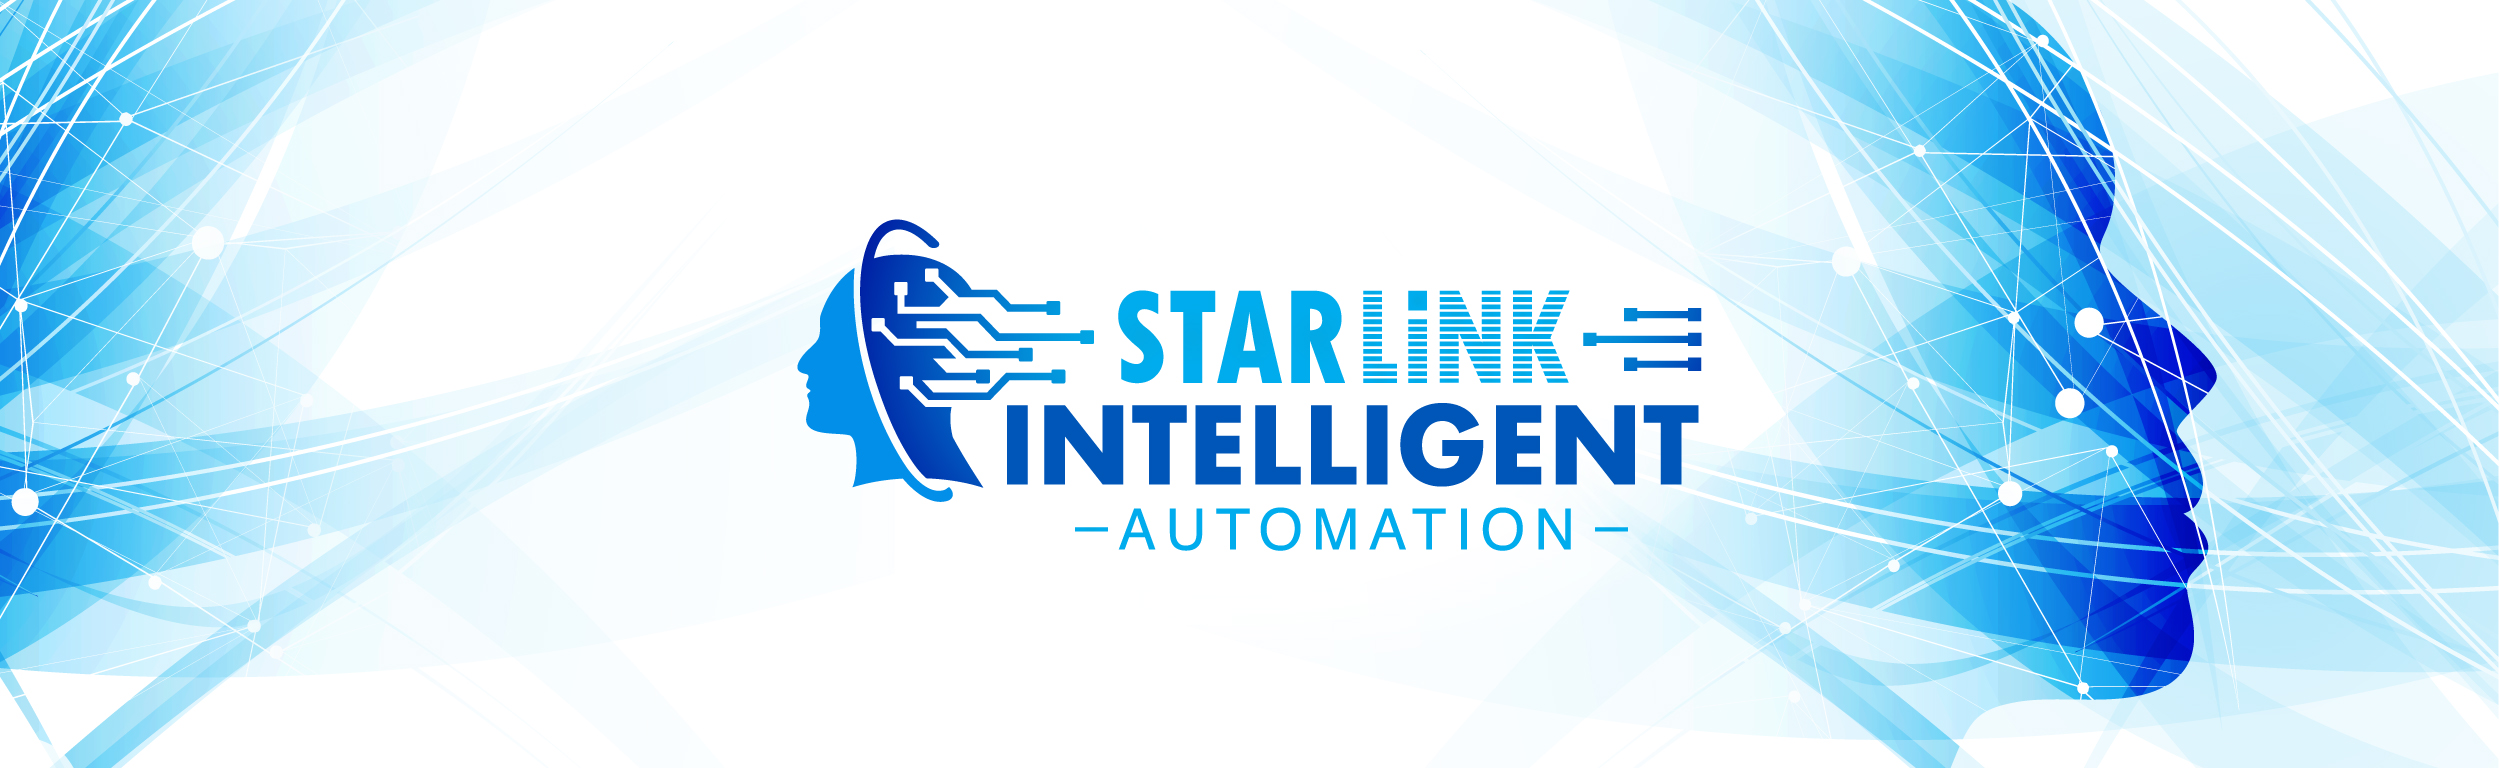 StarLink Intelligent Automation